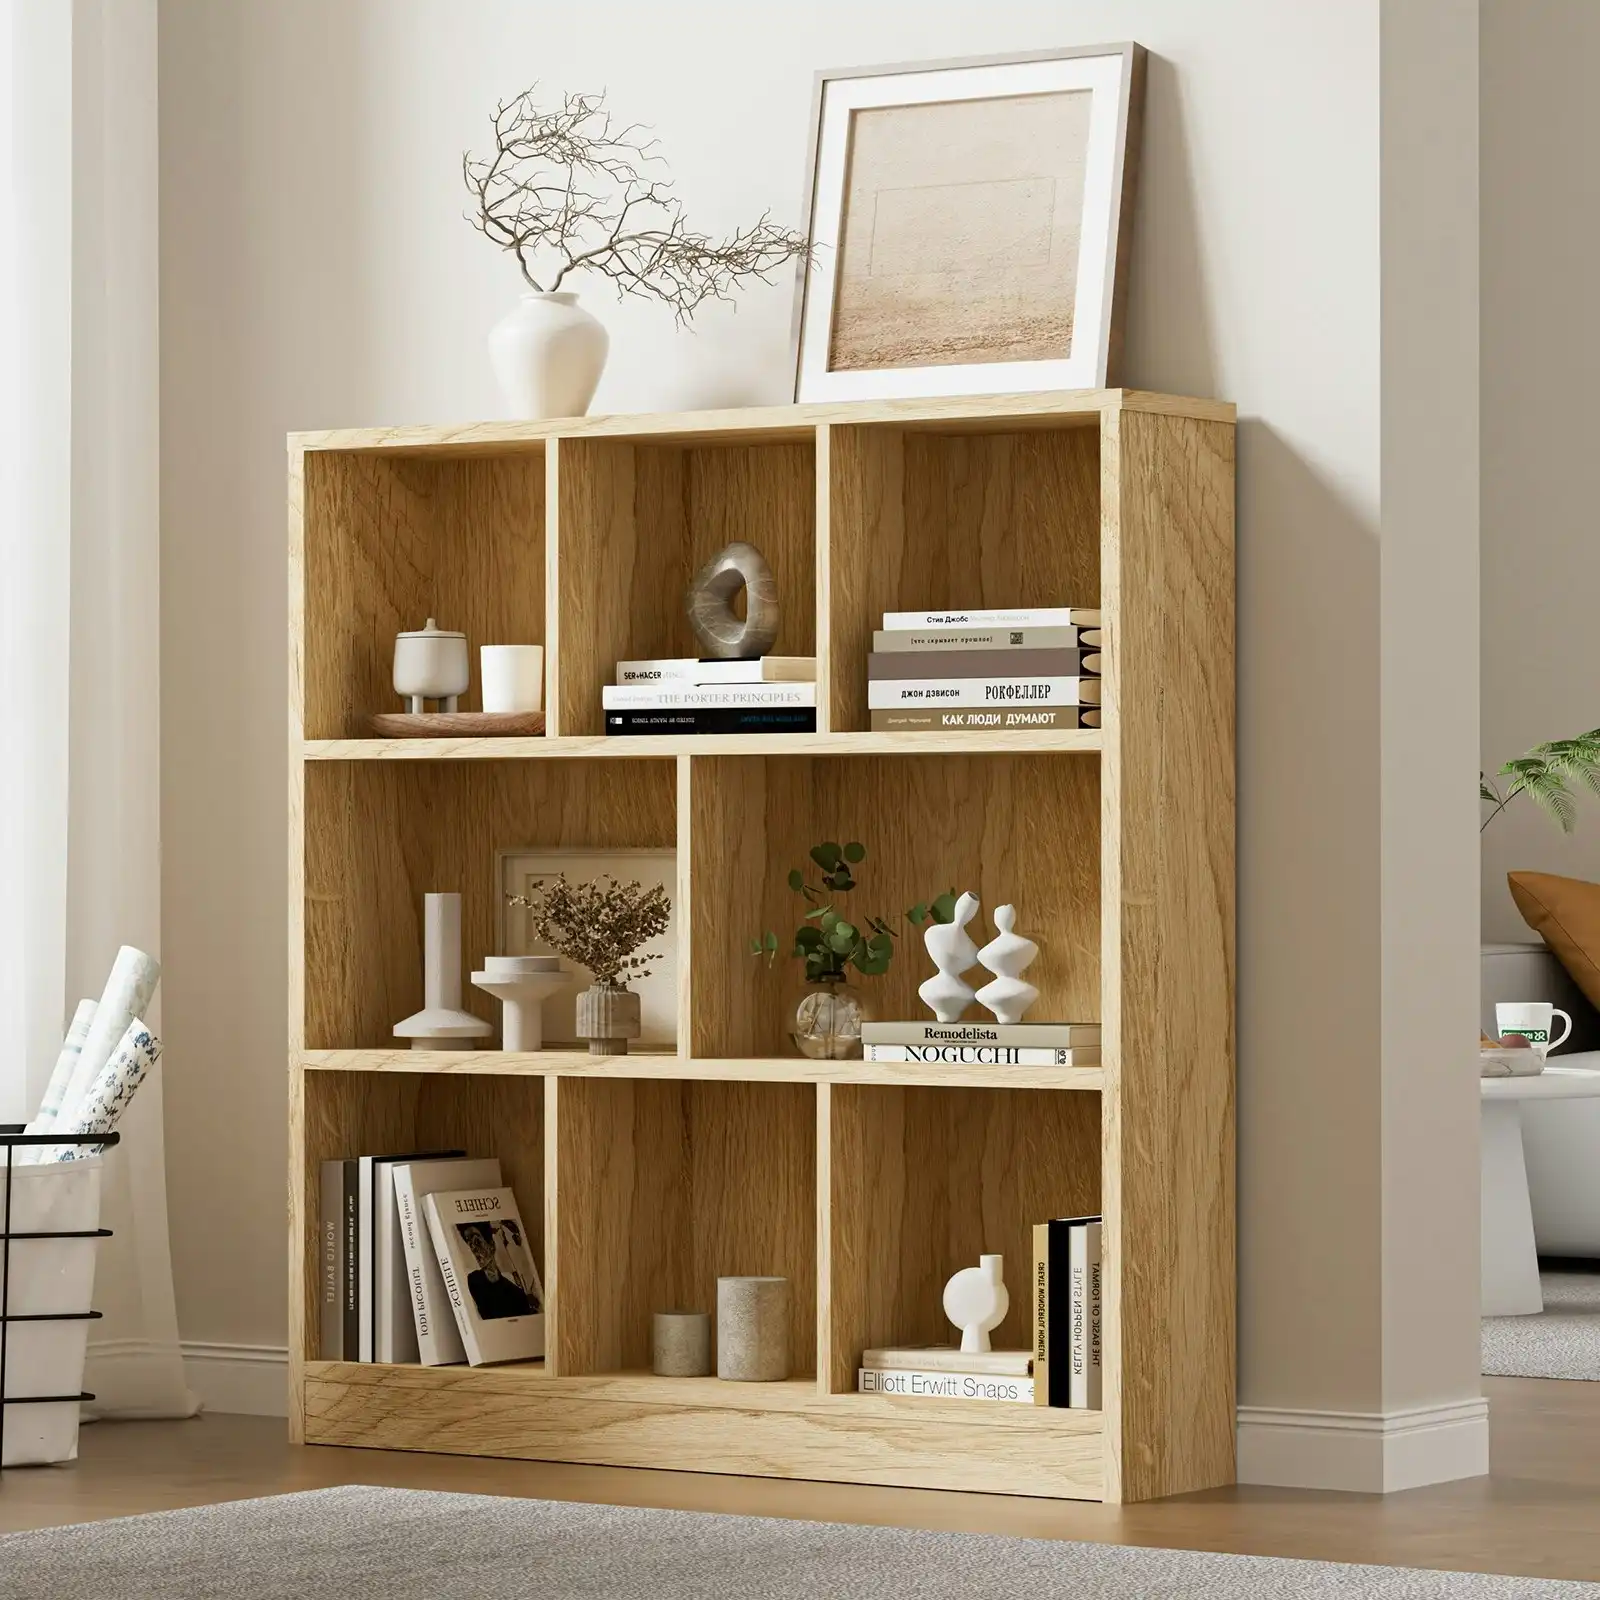 Oikiture Bookshelf Bookcase Display Shelves Unit Storage Organizer Stand Natural